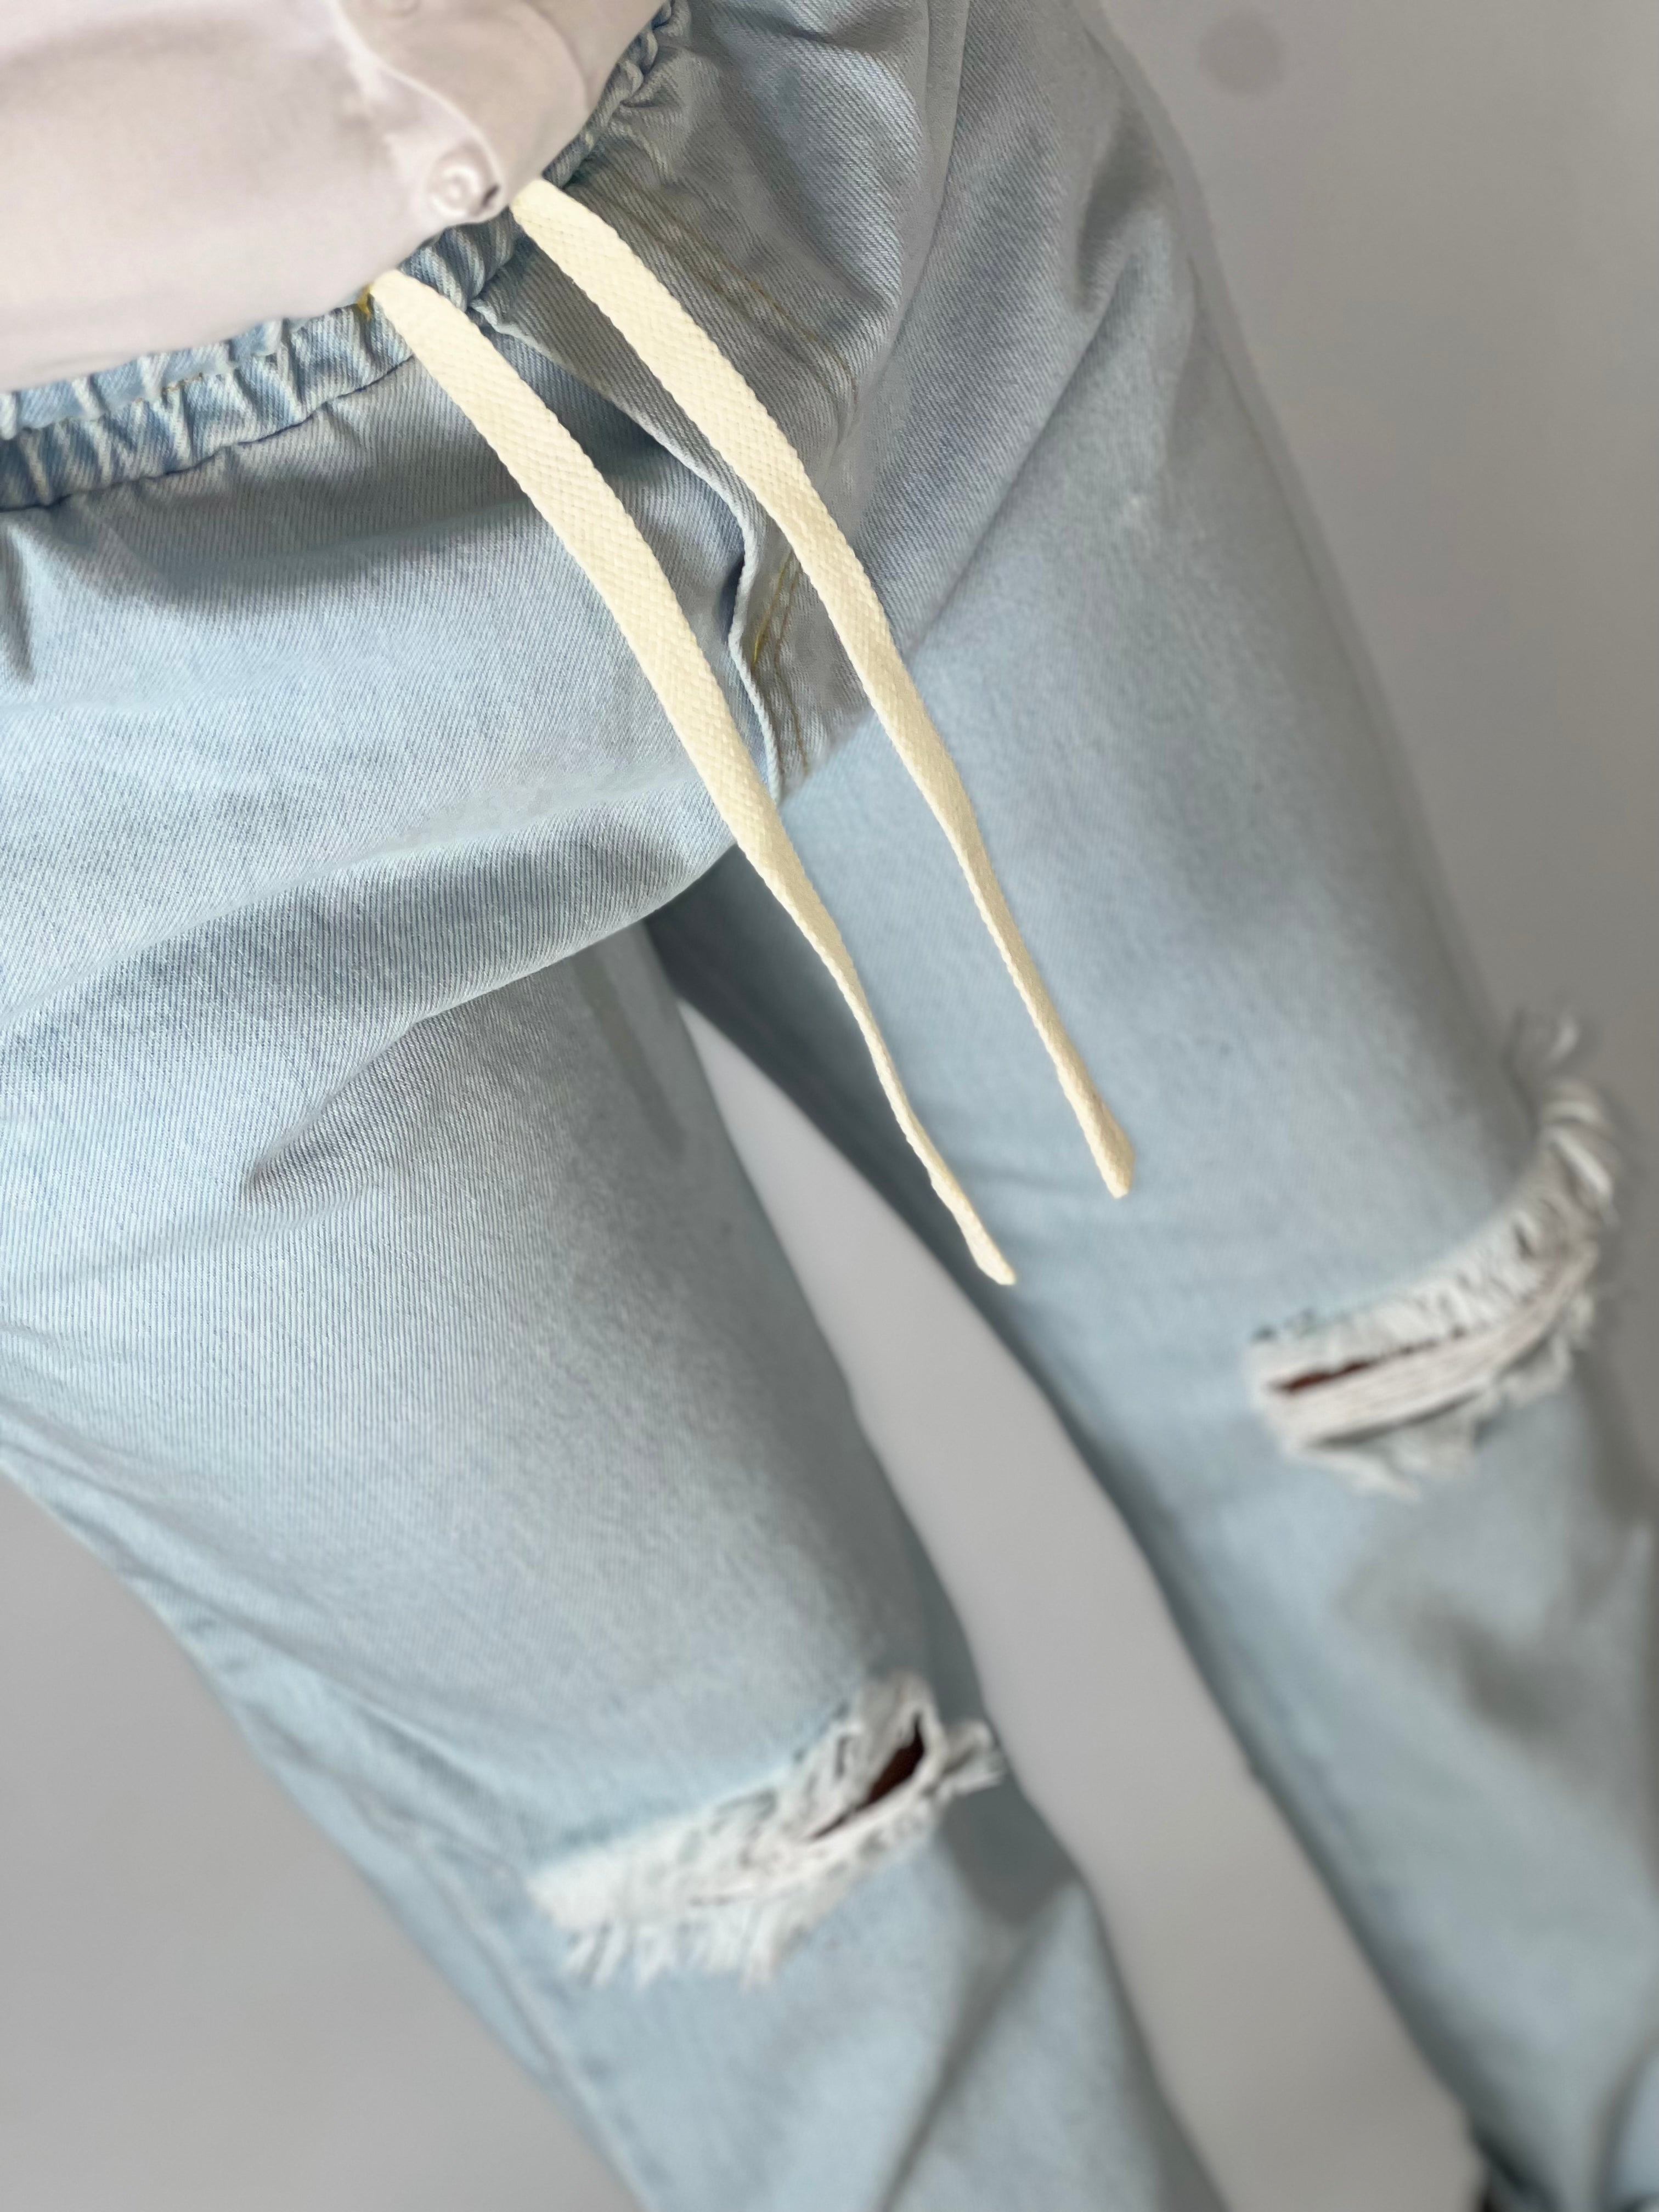 Pantalaccio jeans loose fit AF805